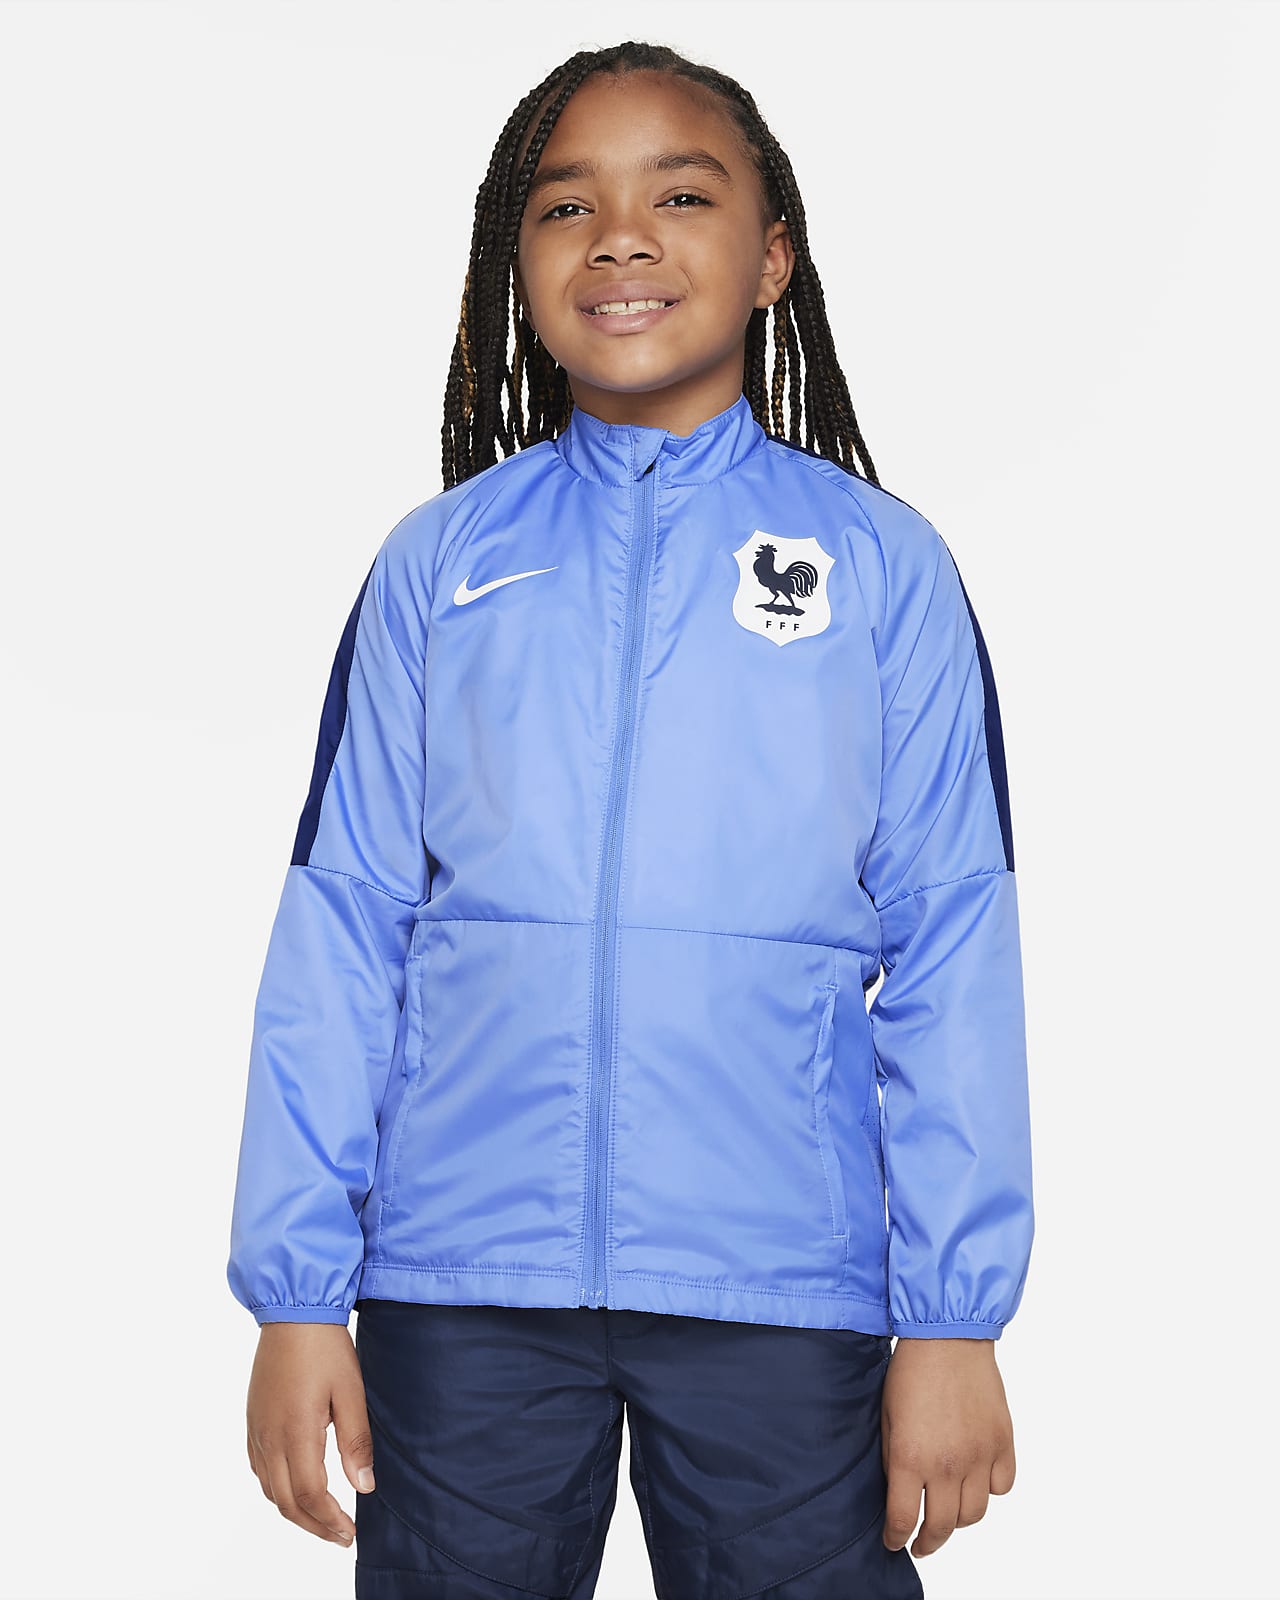 France Repel Academy AWF Older Kids' Football Jacket